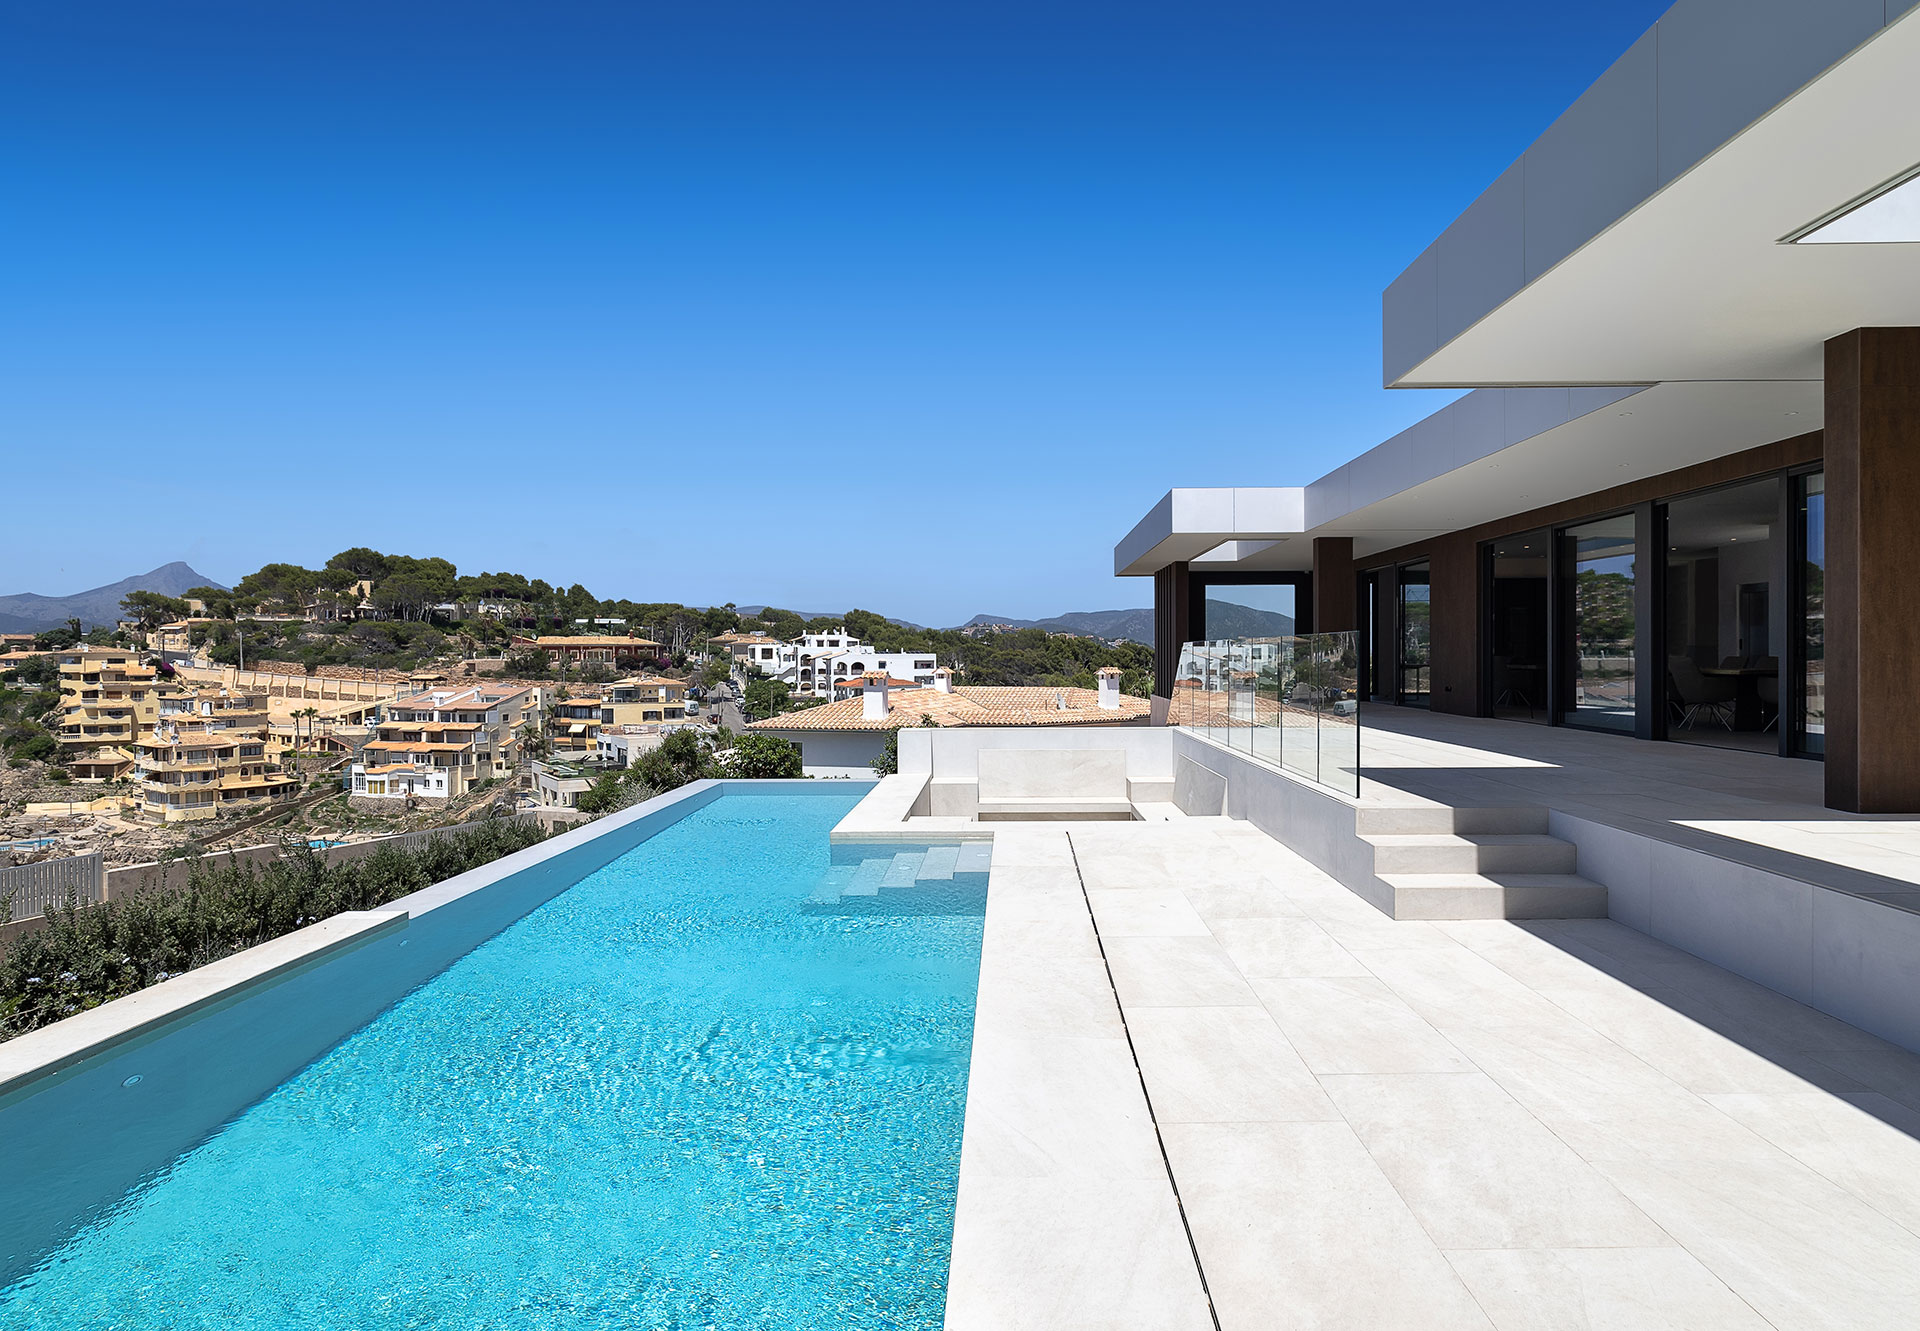 Luxury villa with pool in Majorca